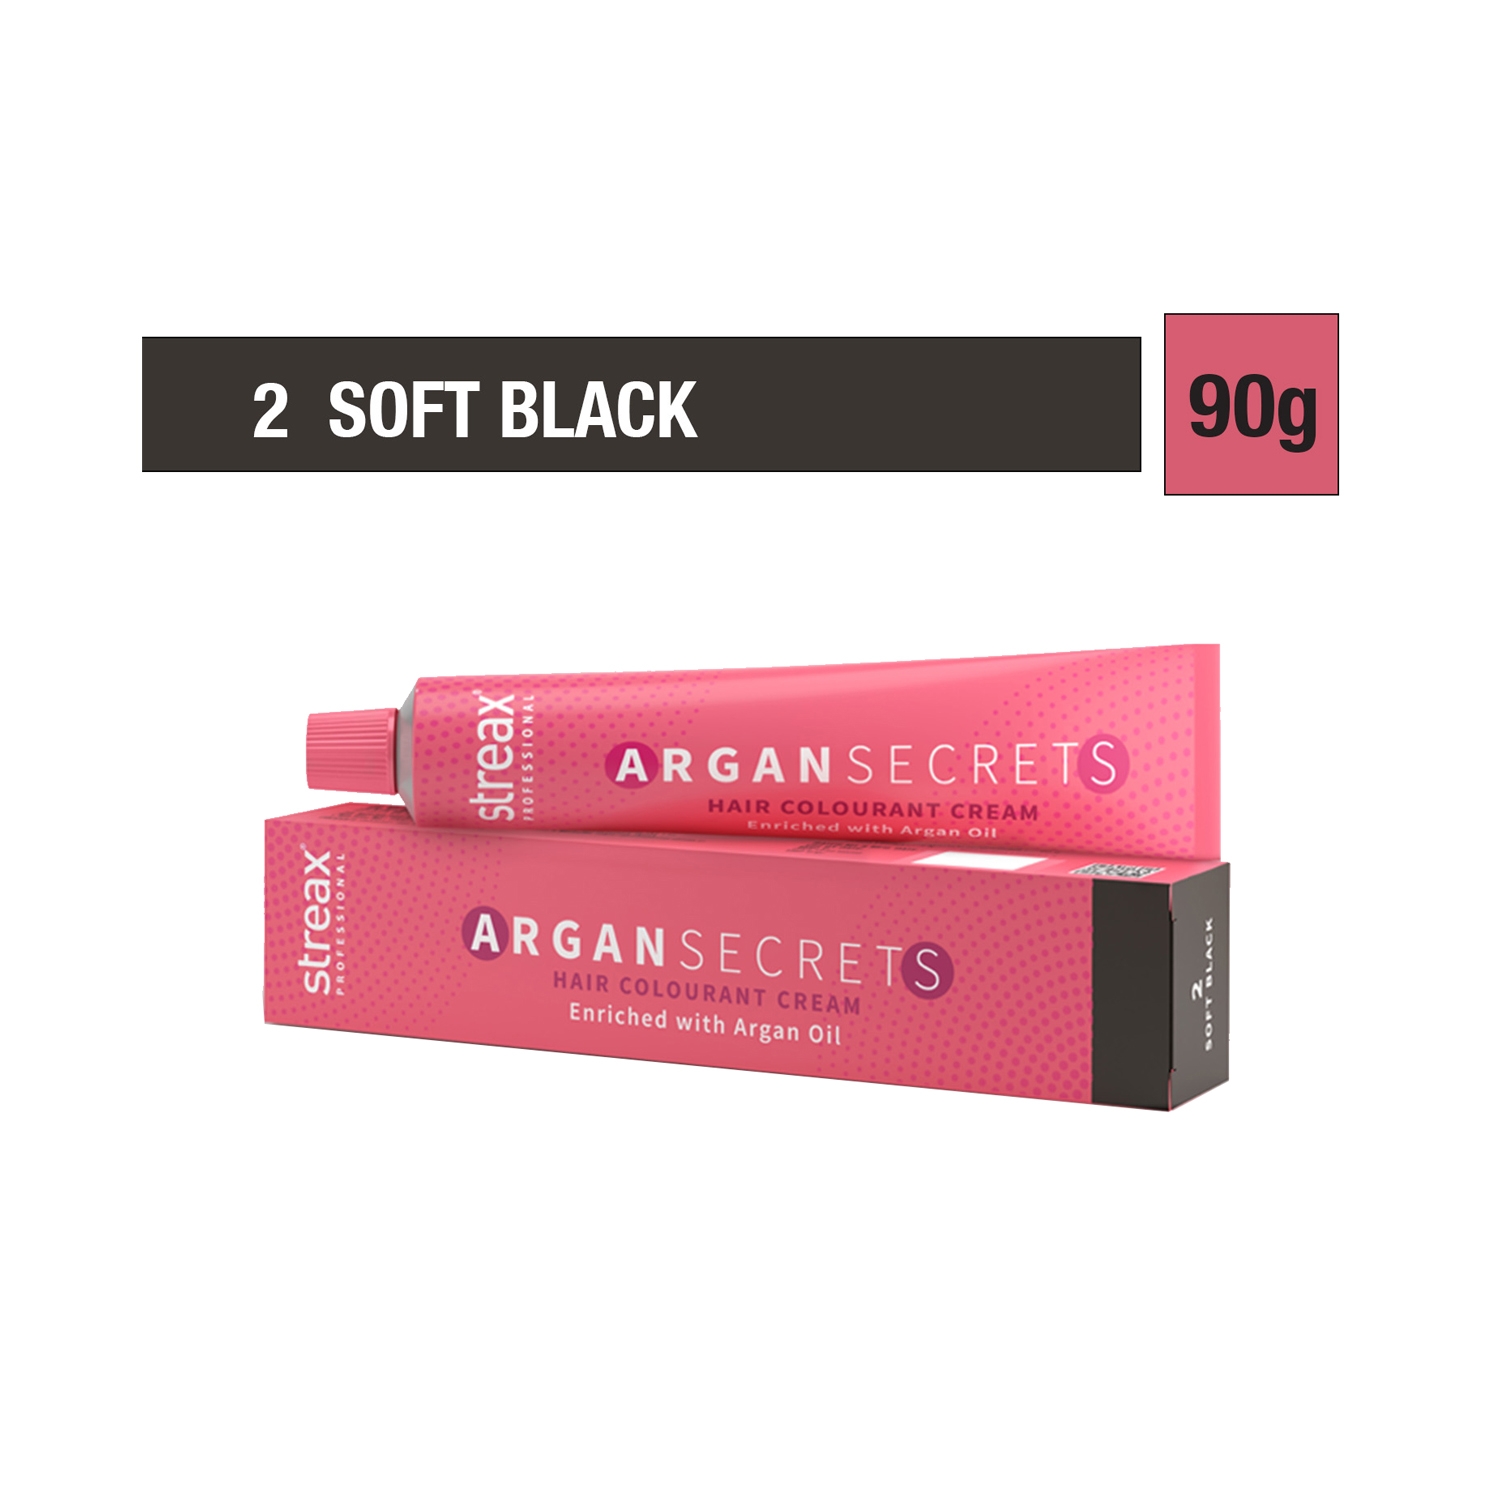 Streax Professional Argan Secrets Hair Colorant Cream - 2 Soft Black (90g)